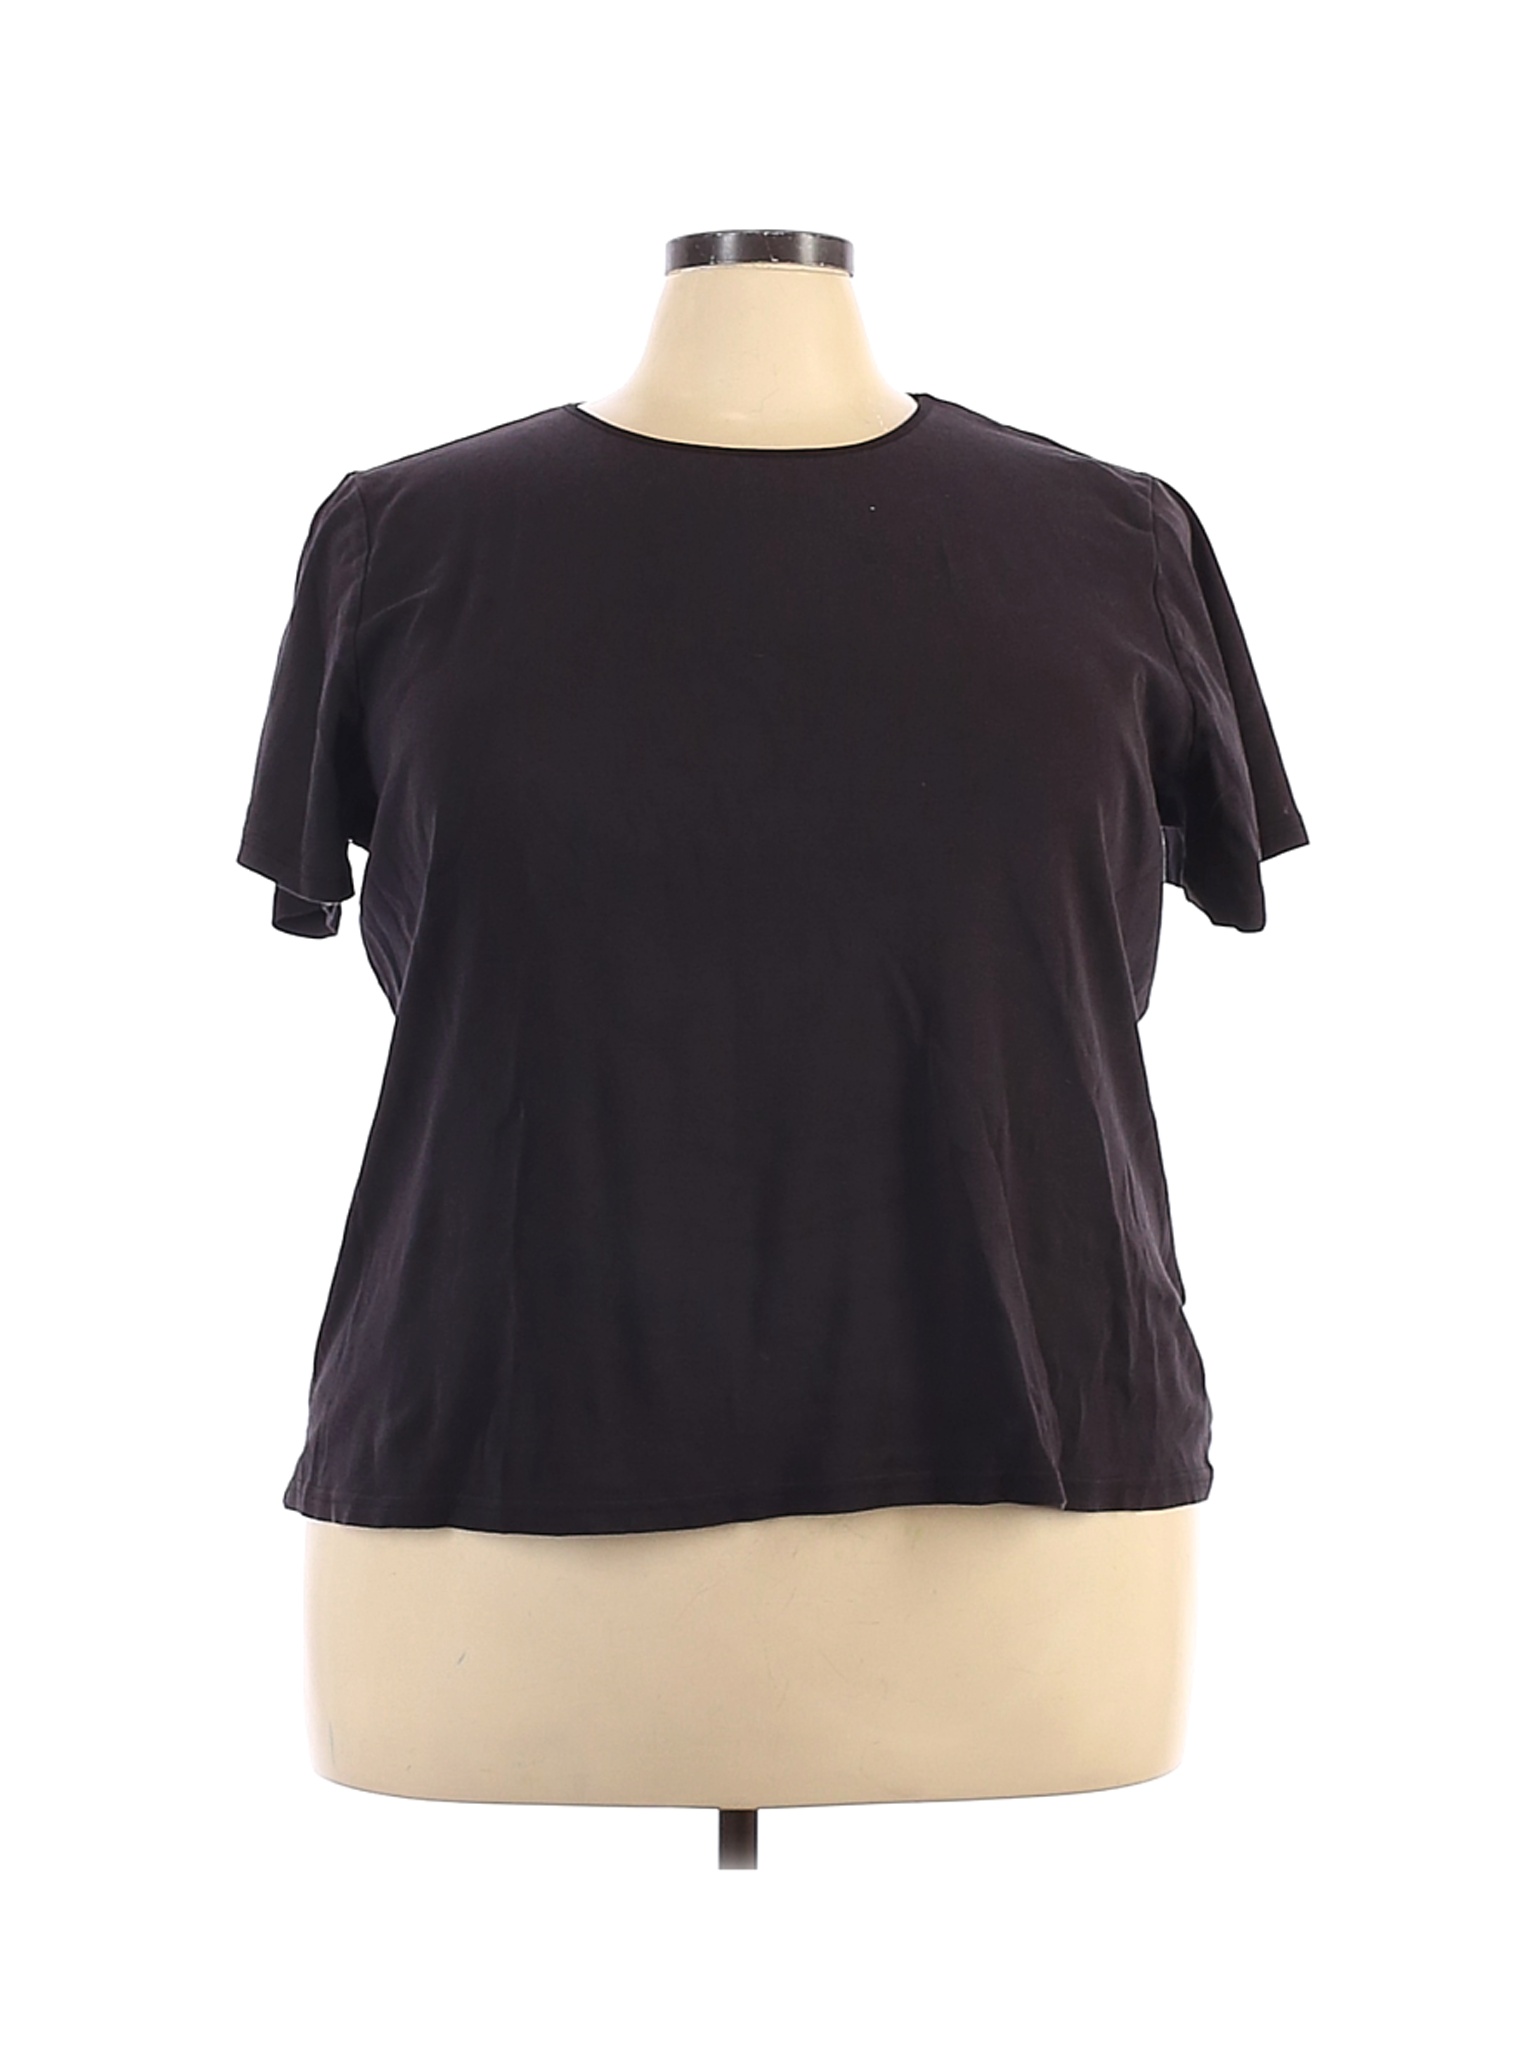 Cj Banks Women Black Short Sleeve T-Shirt 3X Plus | eBay